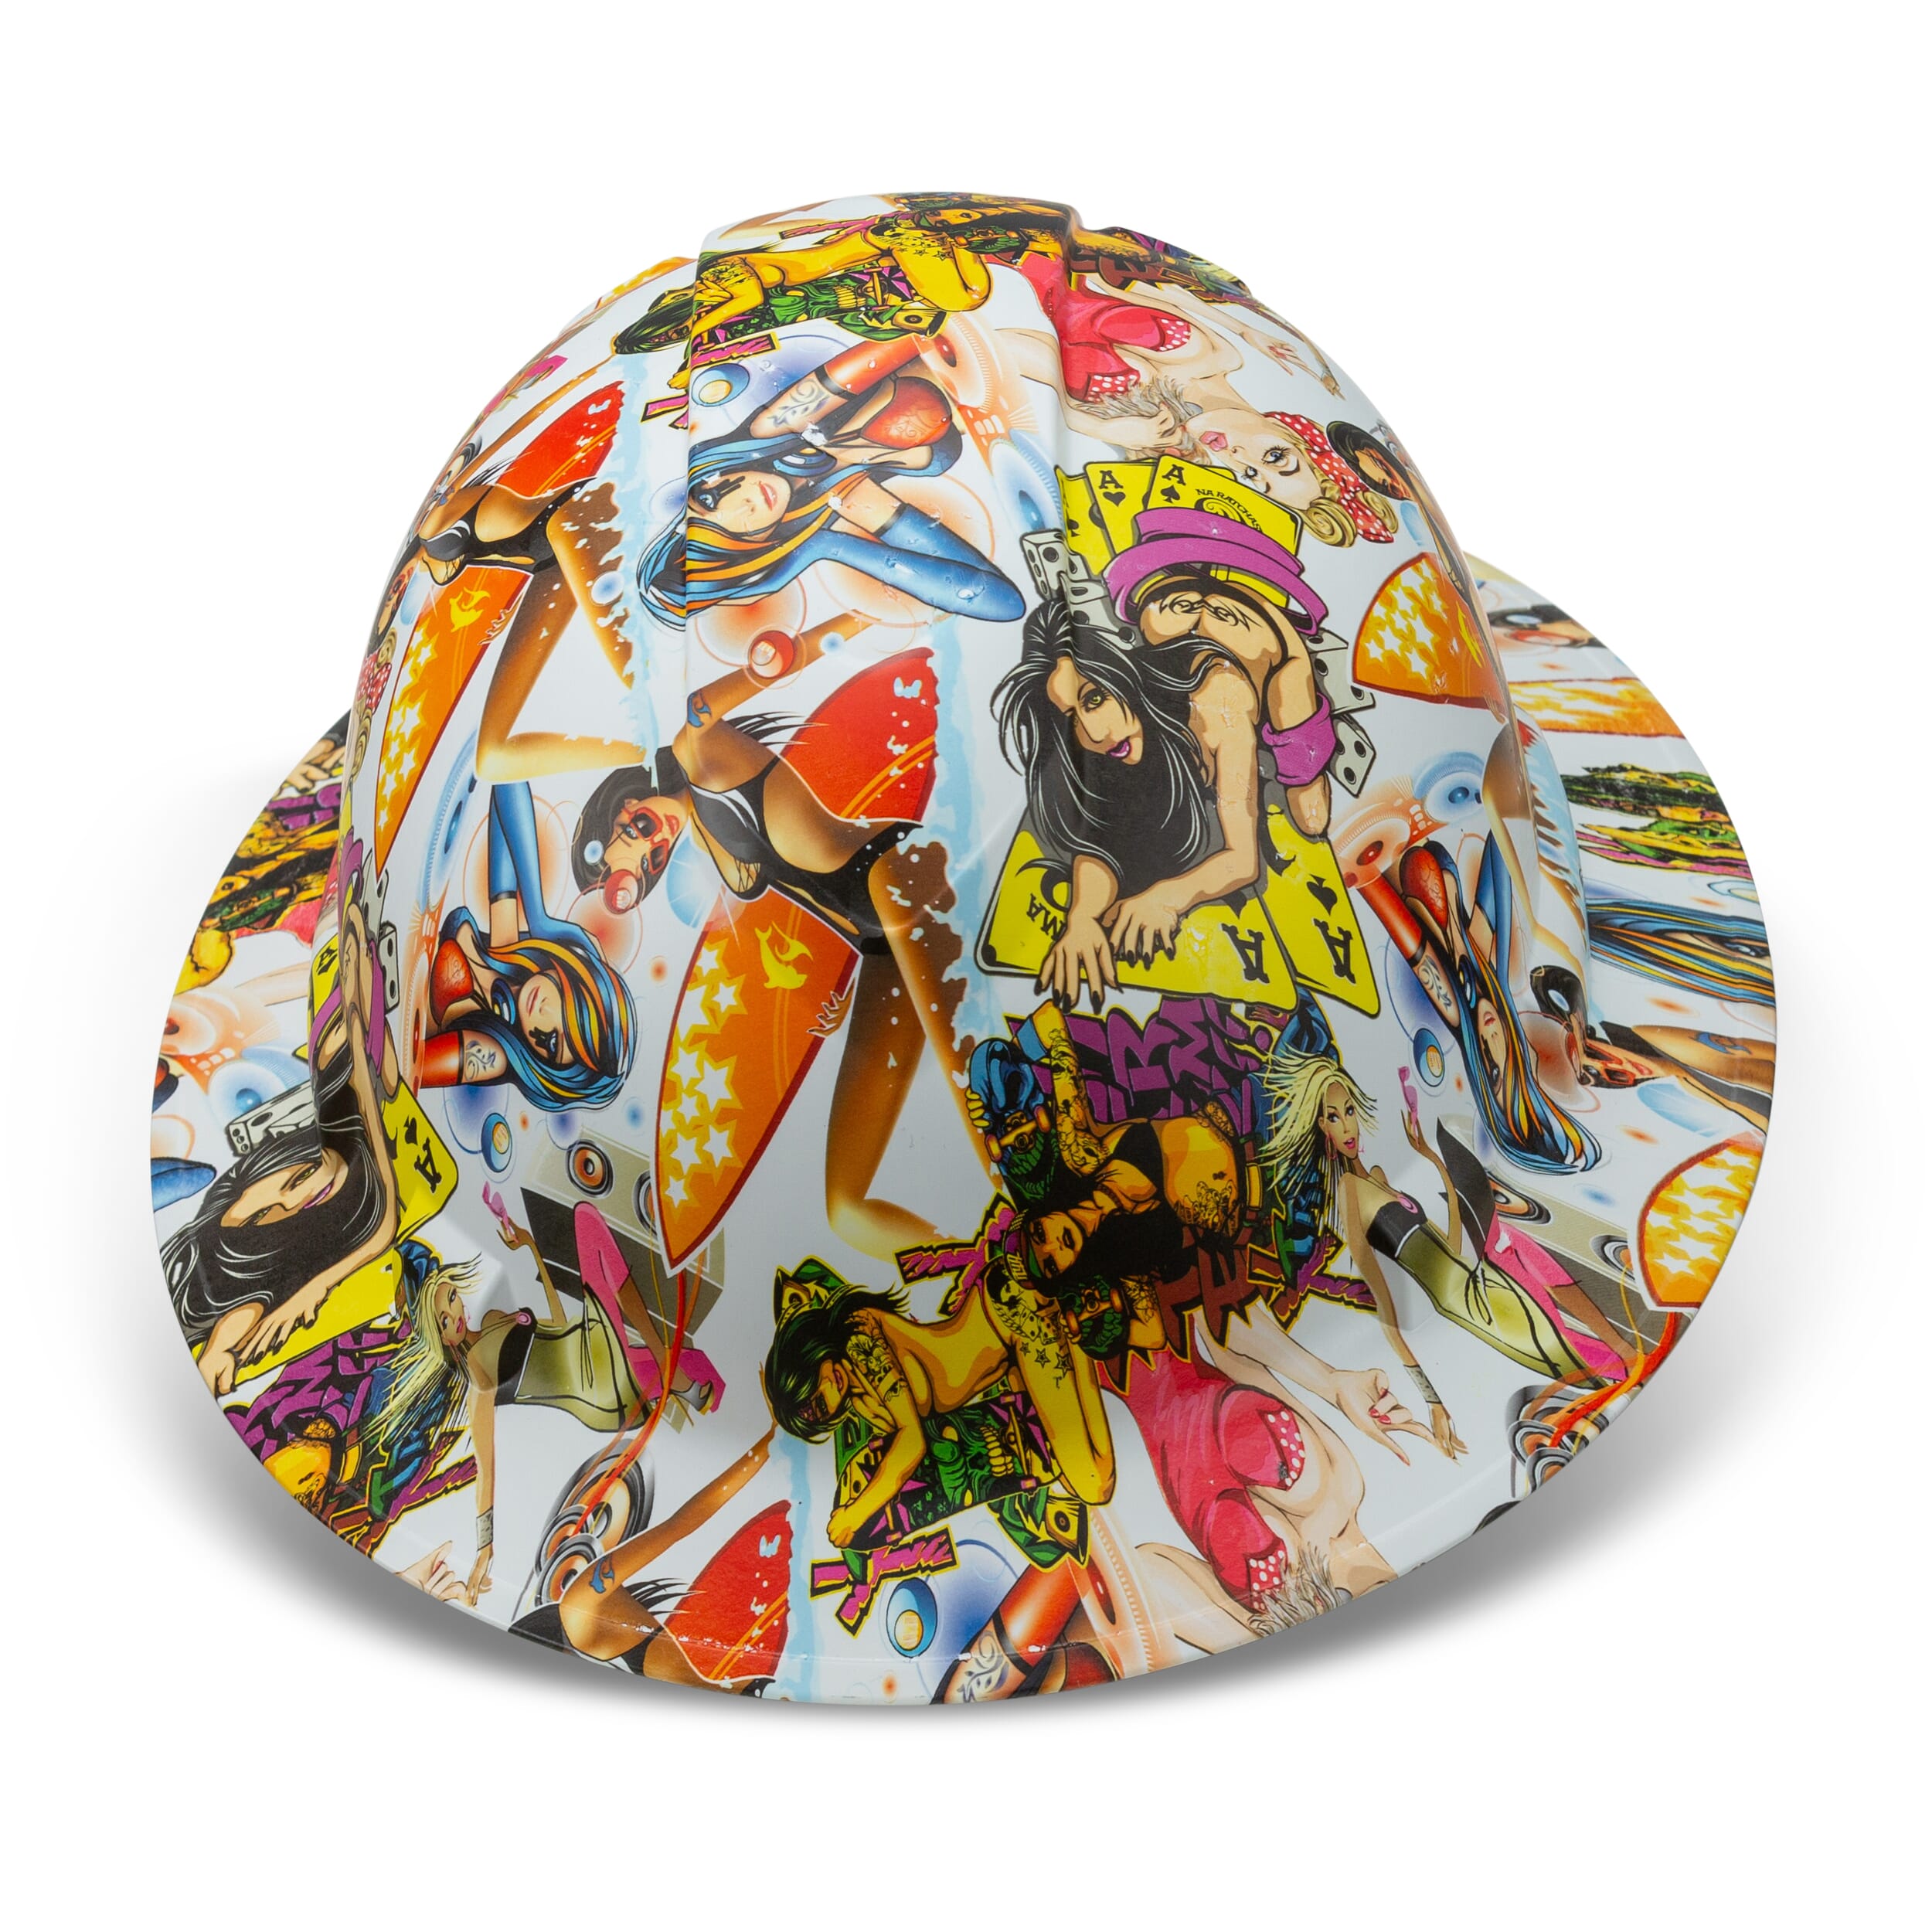 Full Brim Pyramex Hard Hat, Custom Lady Luck Design, Safety Helmet, 6 Point